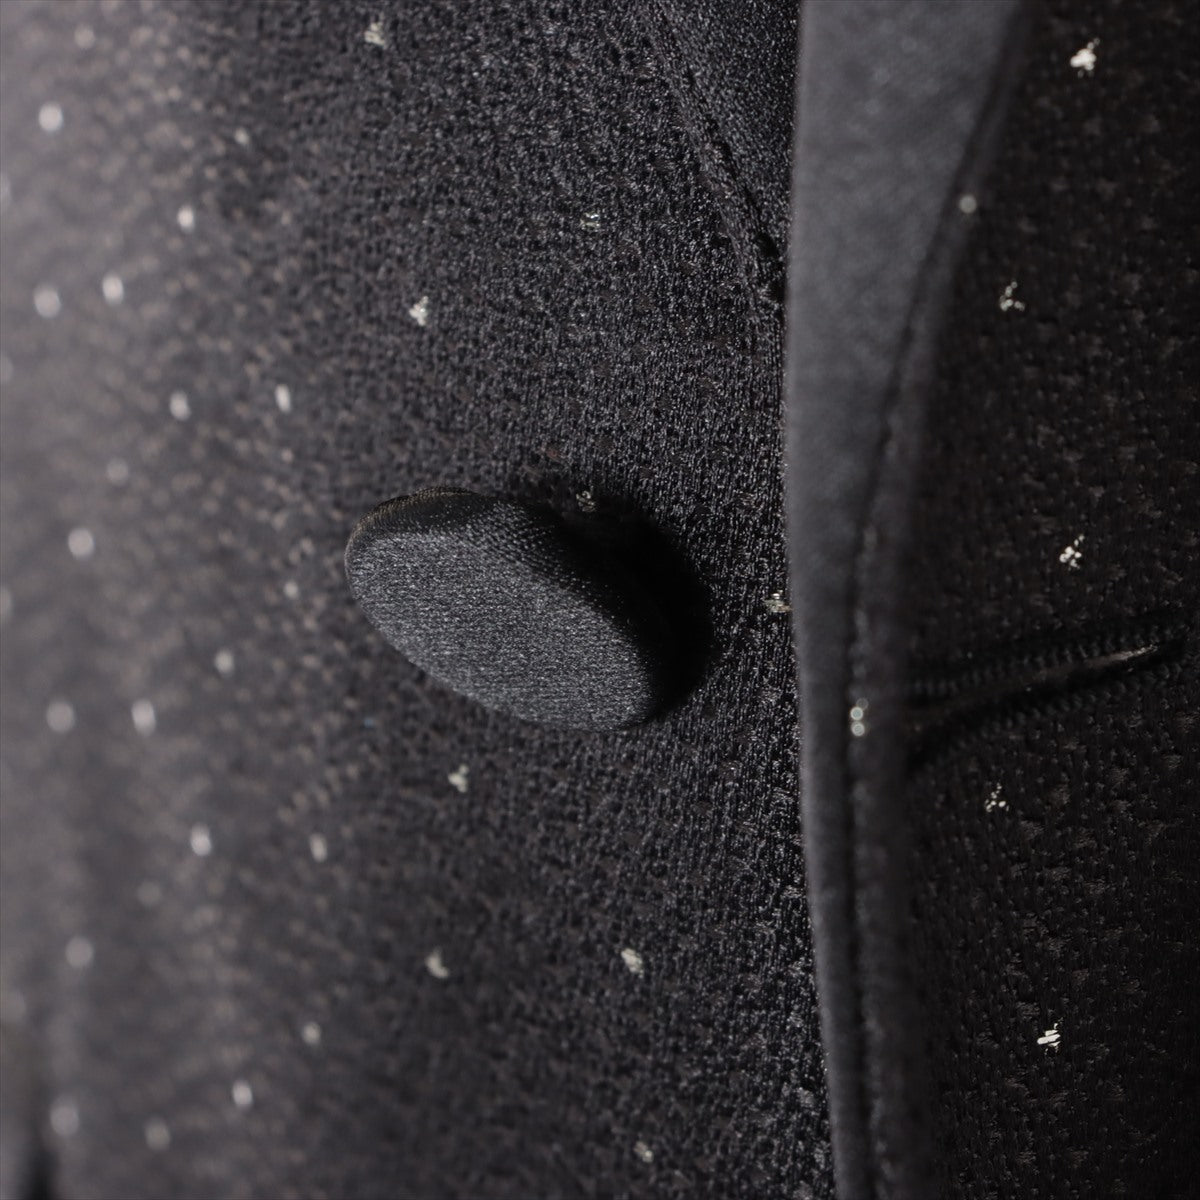 Saint Laurent Paris 16SS Silk × Polyester Down jacket 46 Men's Black  416466 smoking